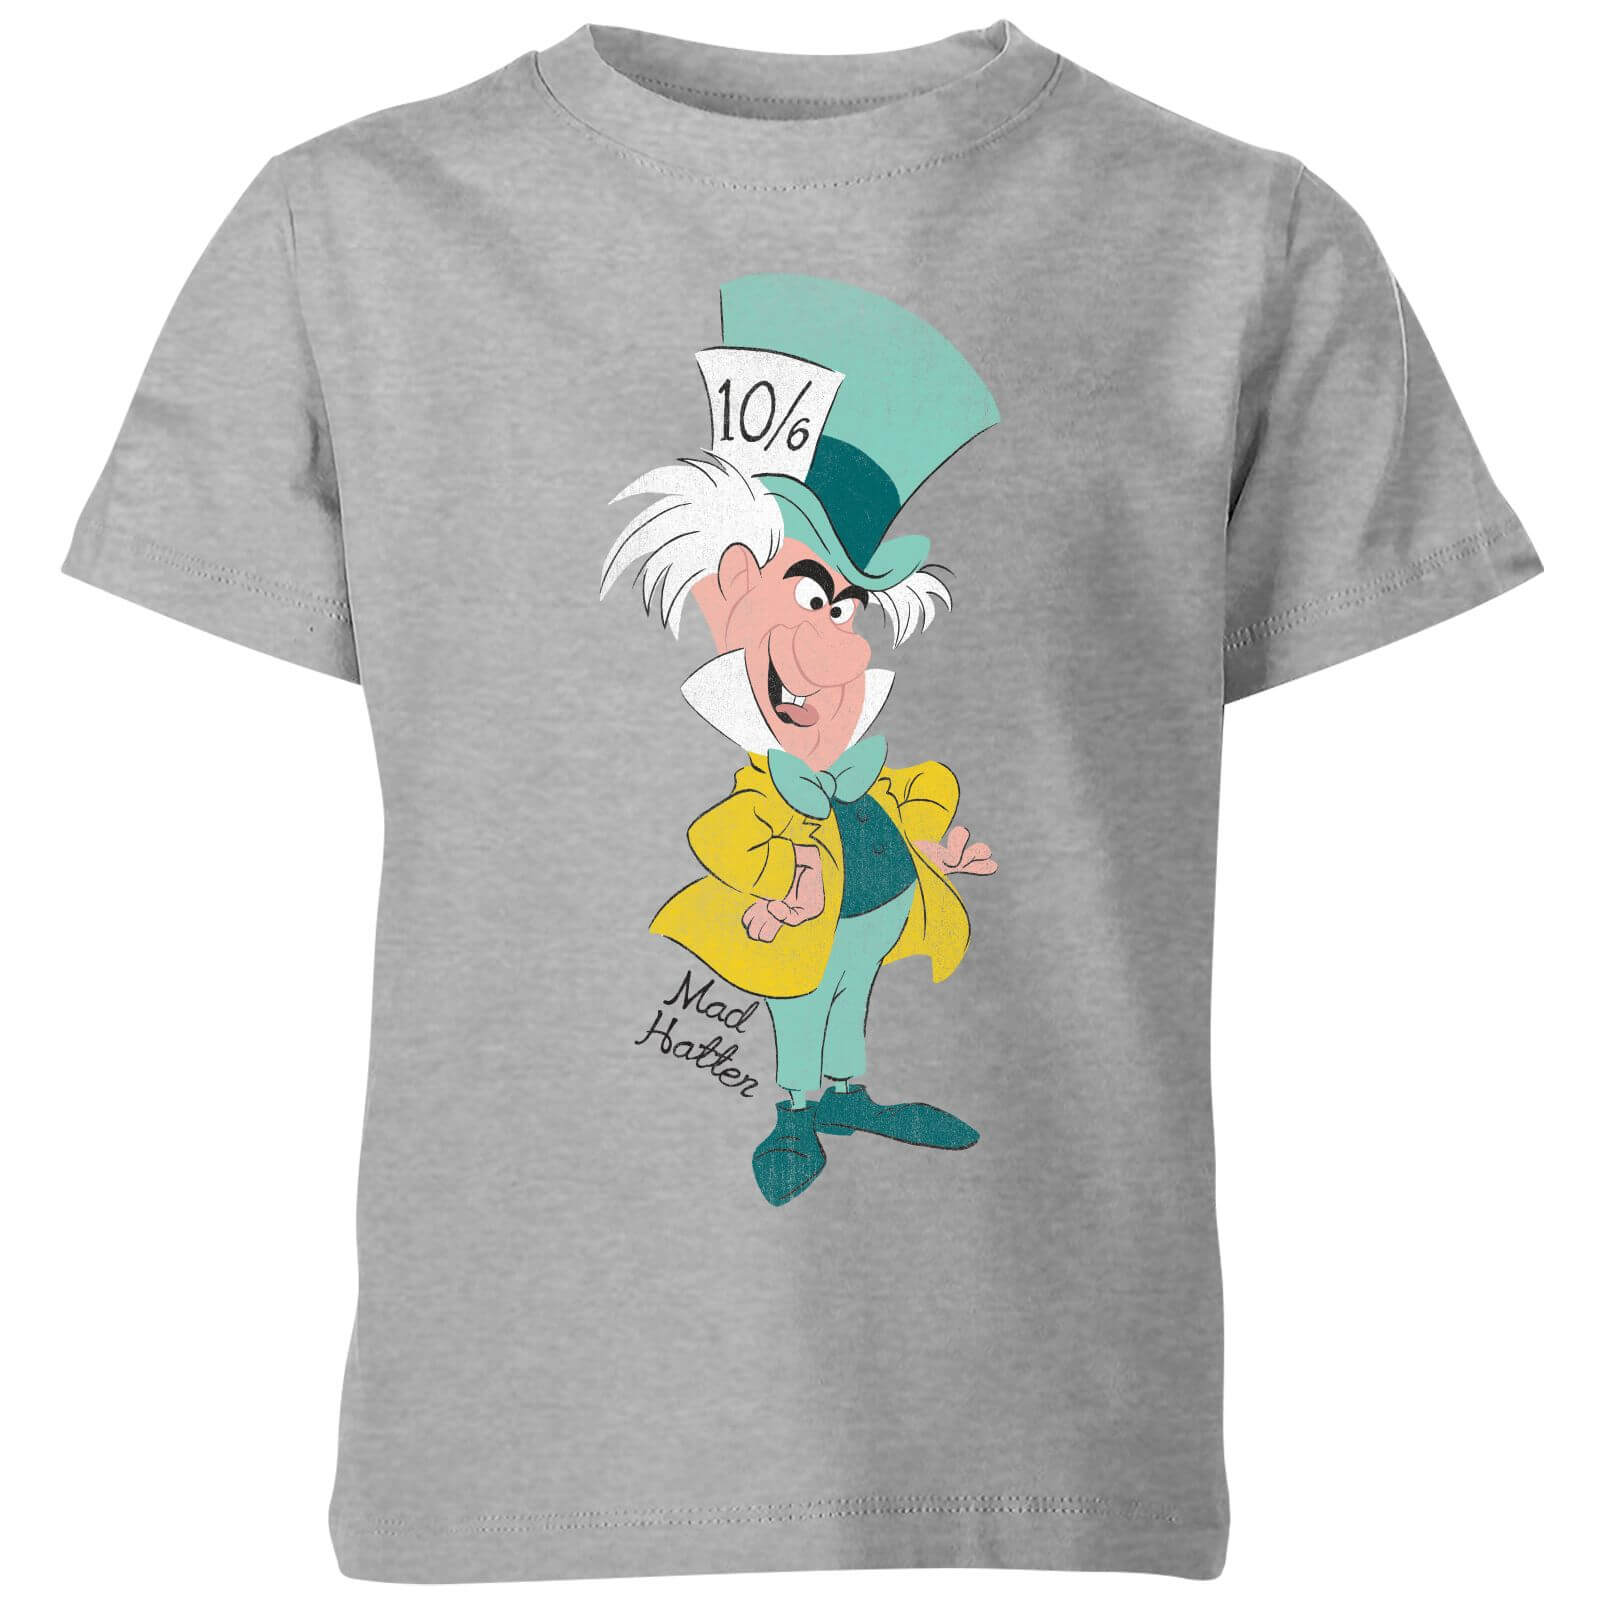 Disney Alice In Wonderland Mad Hatter Classic Kids' T-Shirt - Grey - 7-8 Years - Grey